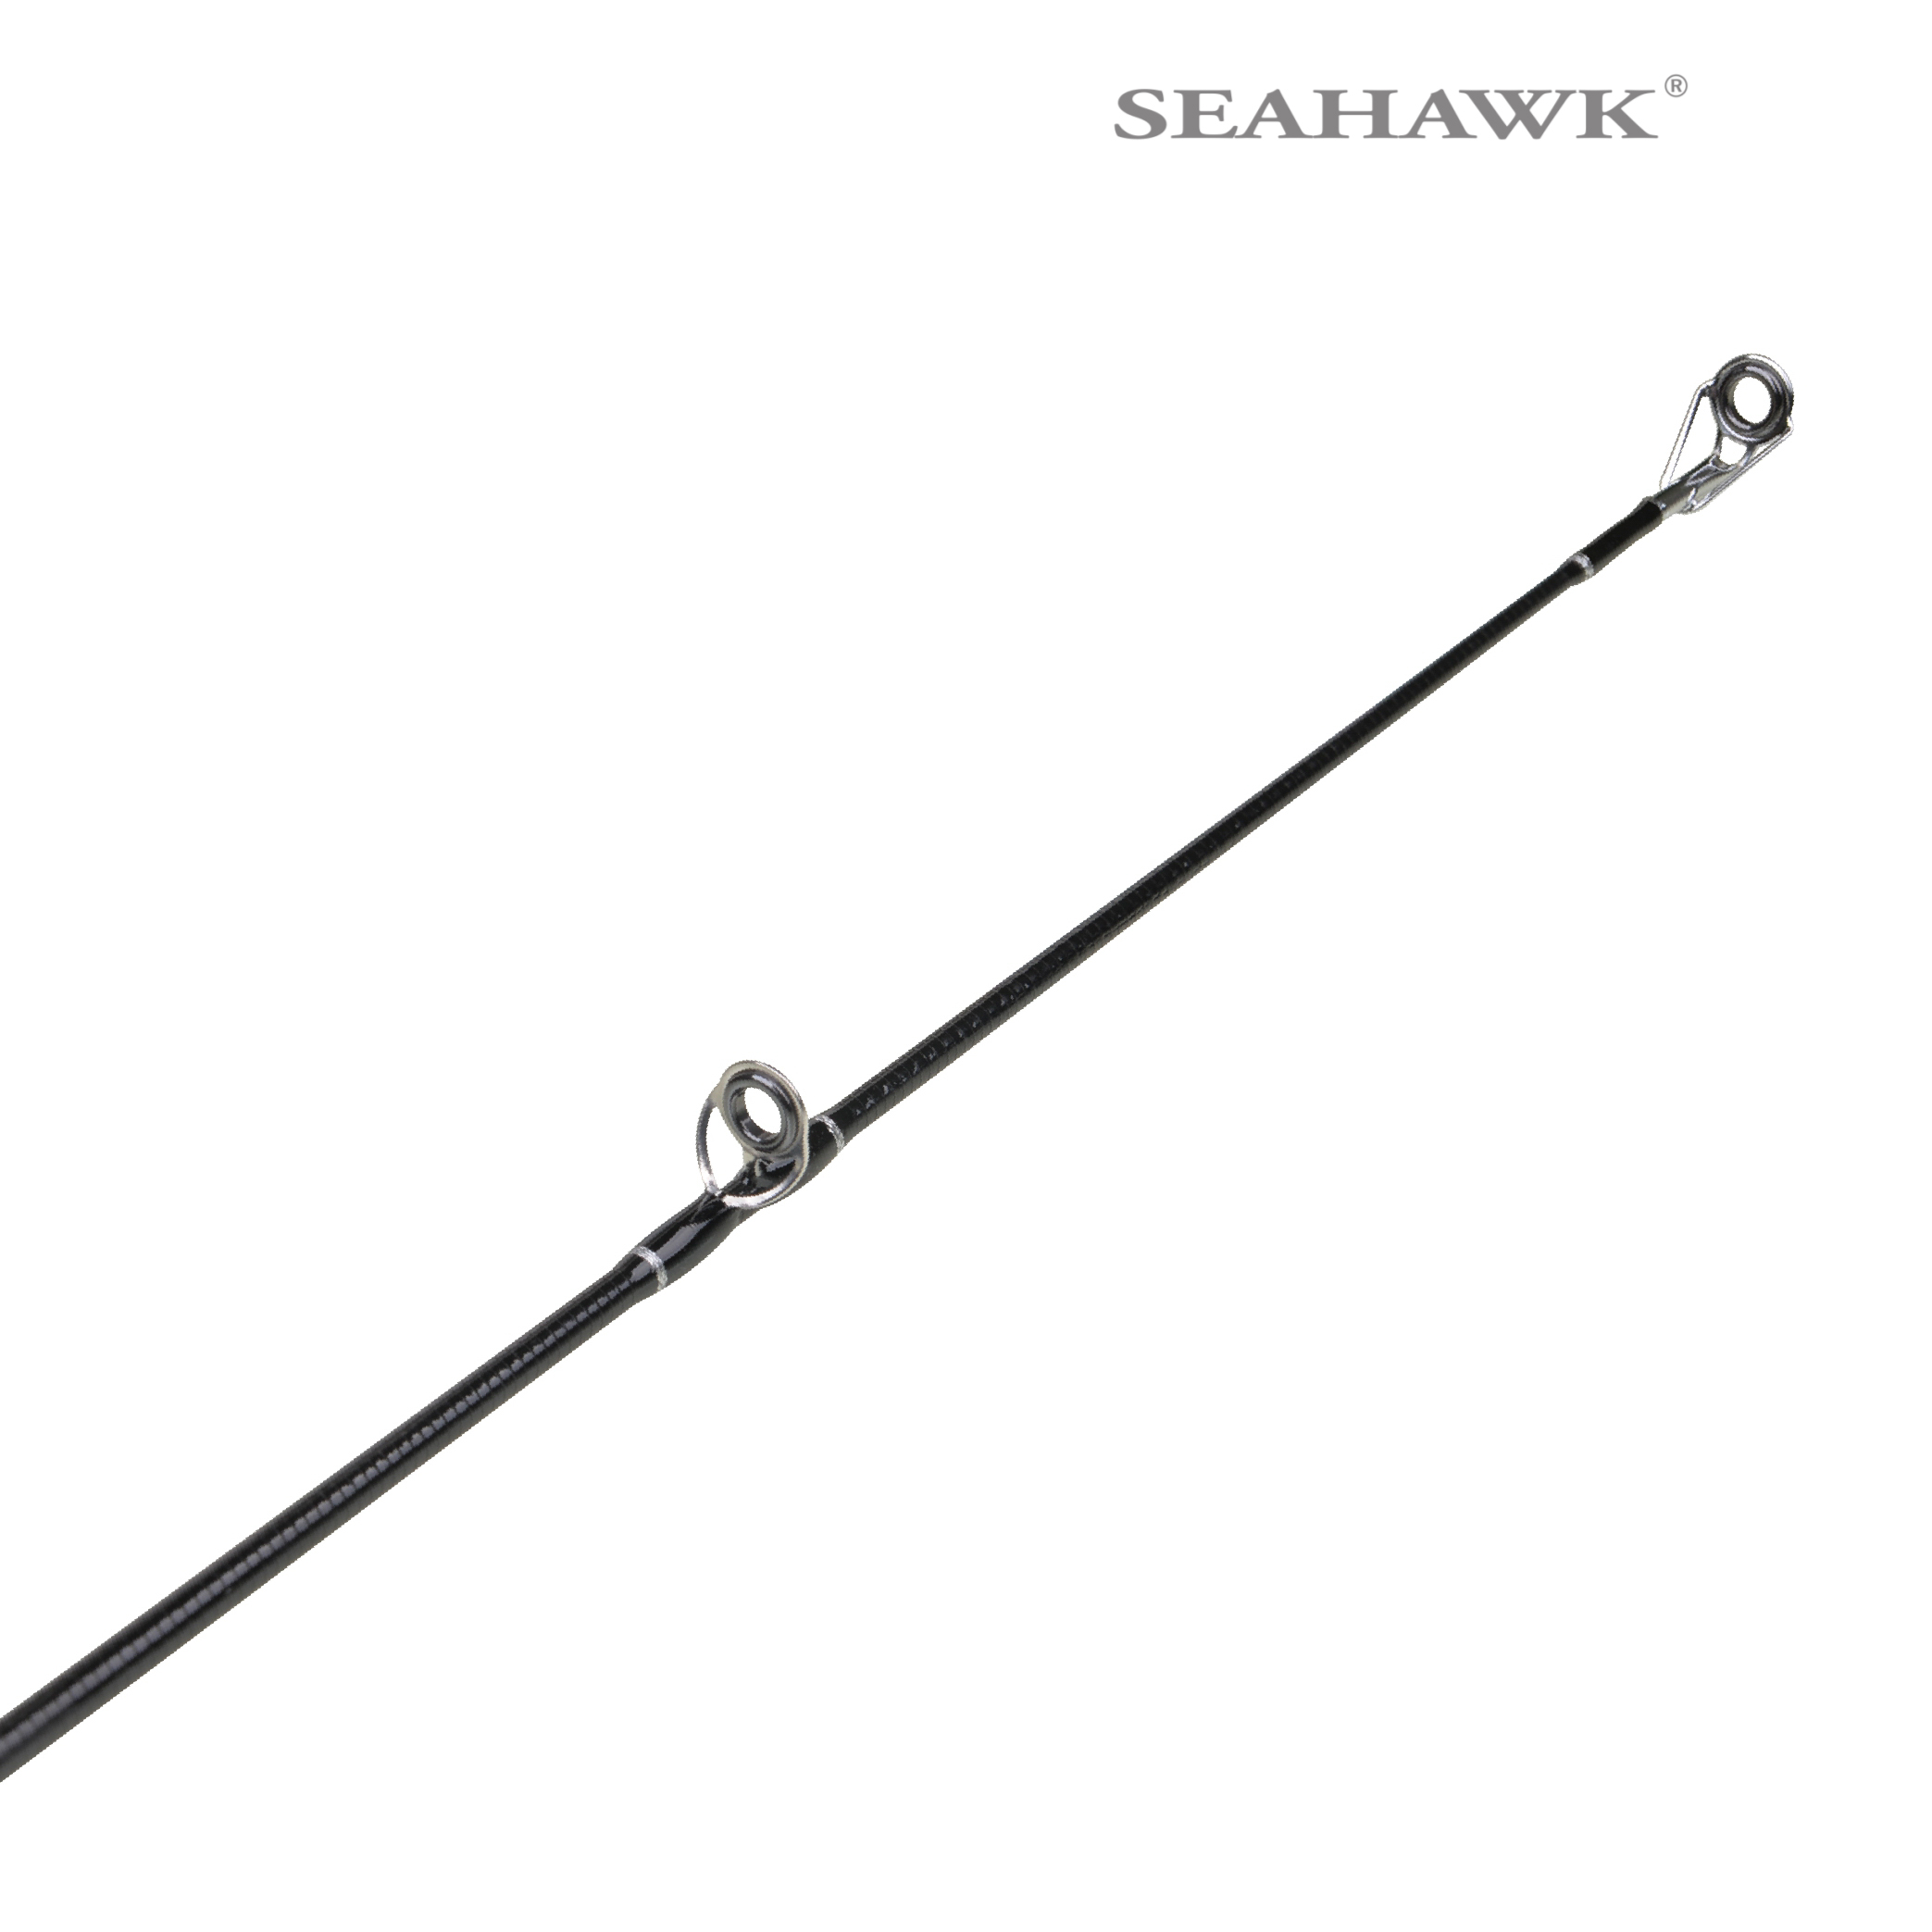 Seahawk Power Seven PS 03